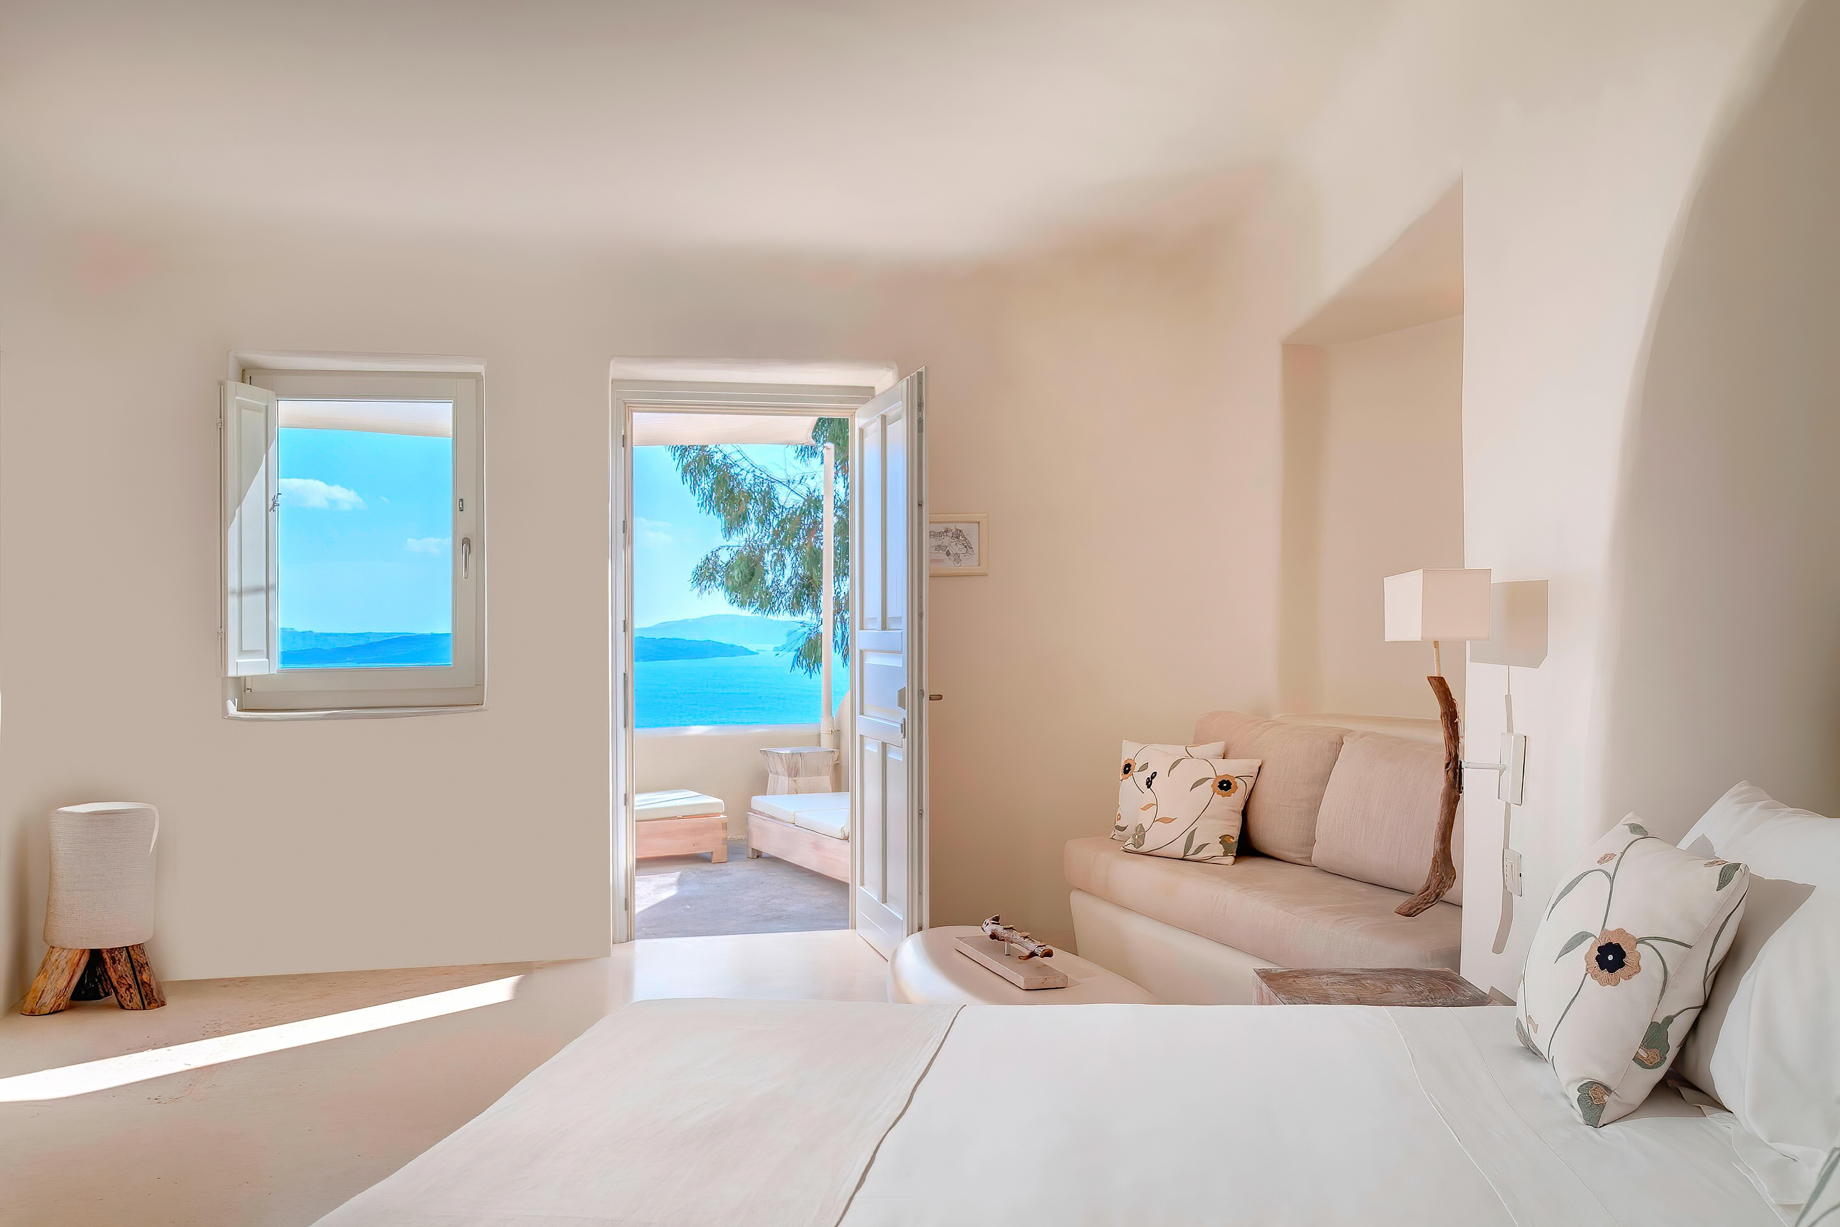 aMystique Hotel Santorini – Oia, Santorini Island, Greece – Vibrant Suite Living Area Views